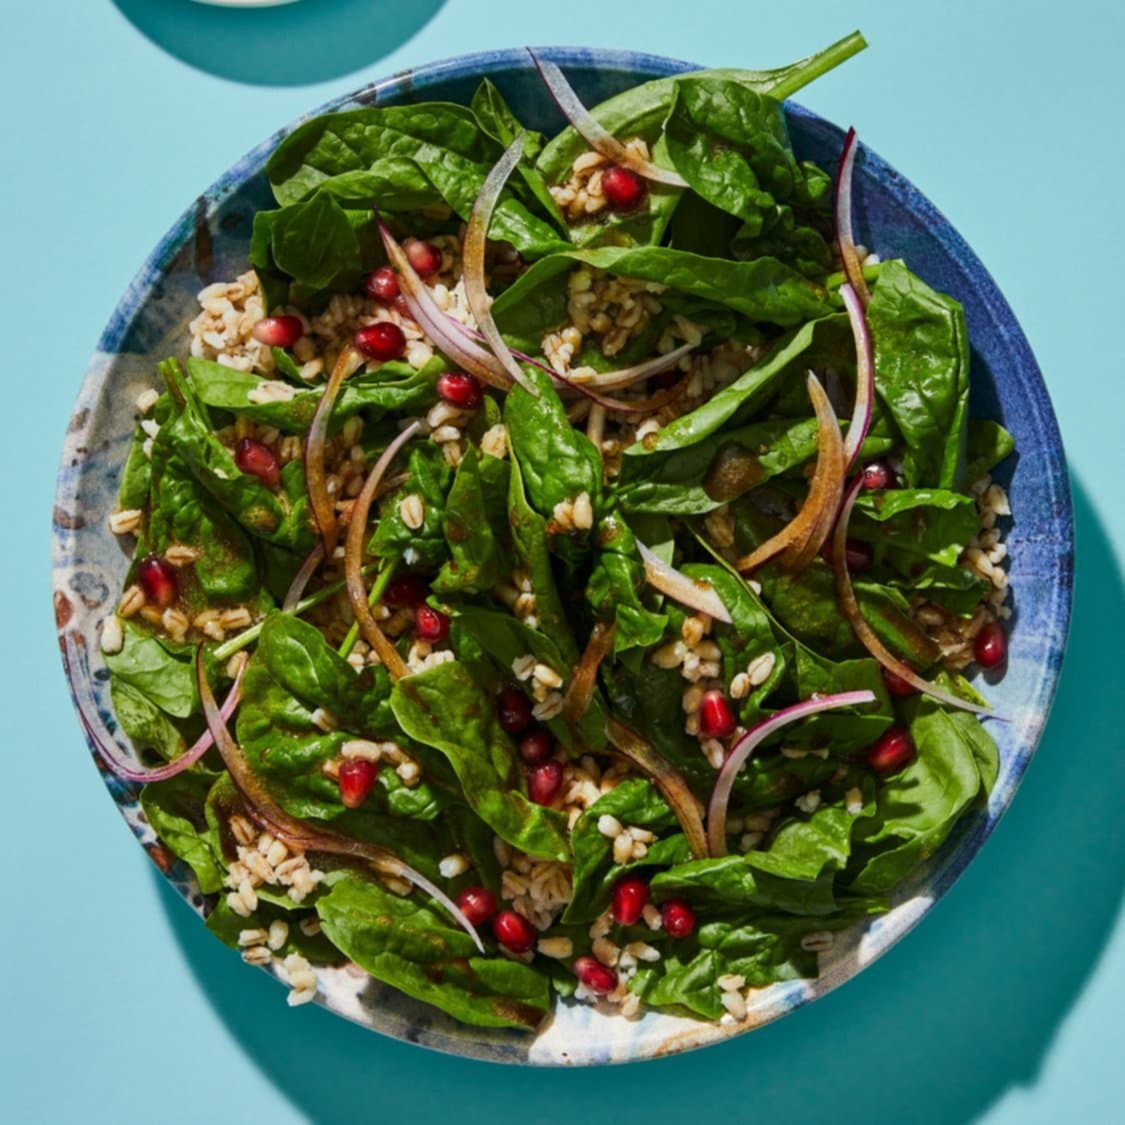 https://fleishigs.com/images/mobile-app/recipes/3002-list-barley-spinach-salad.jpg